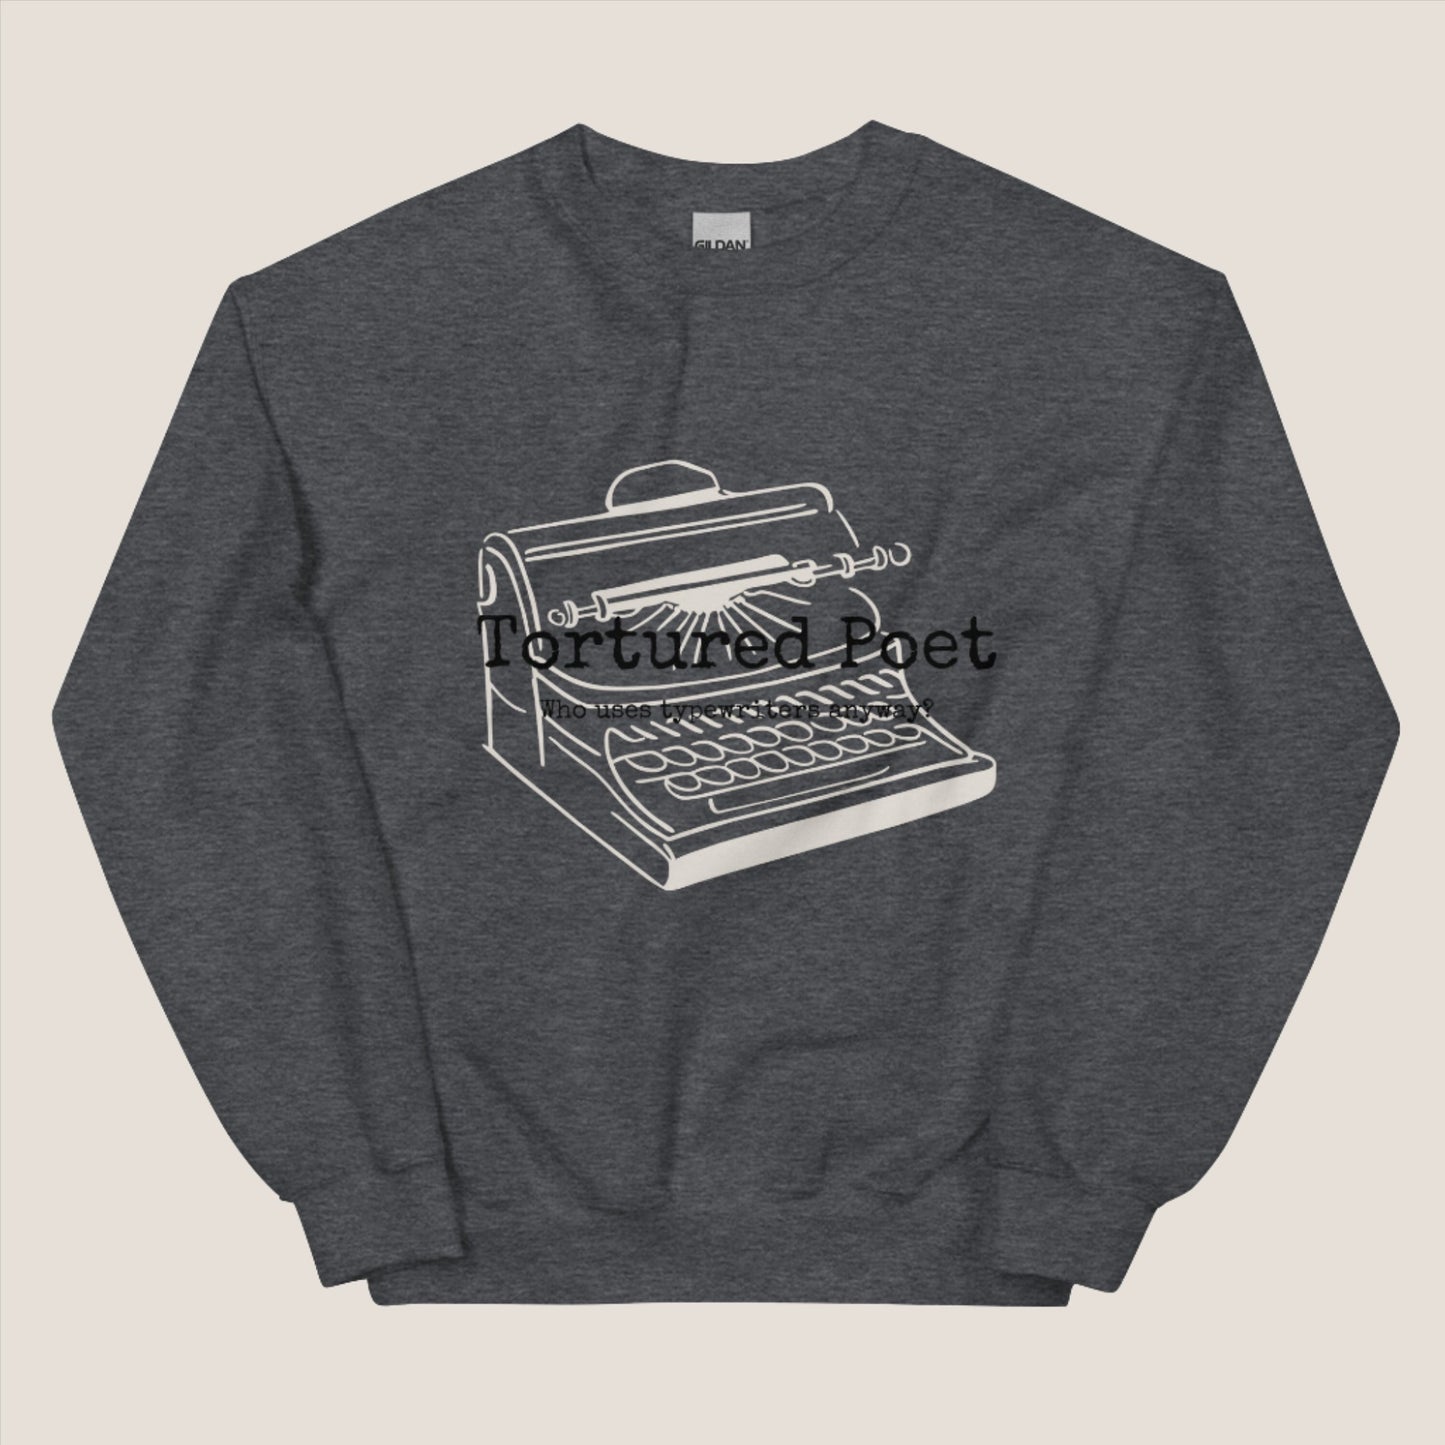 "Tortured Poet" Typewriter Taylor Swift inspired Unisex Sweatshirt // Delysia Designs